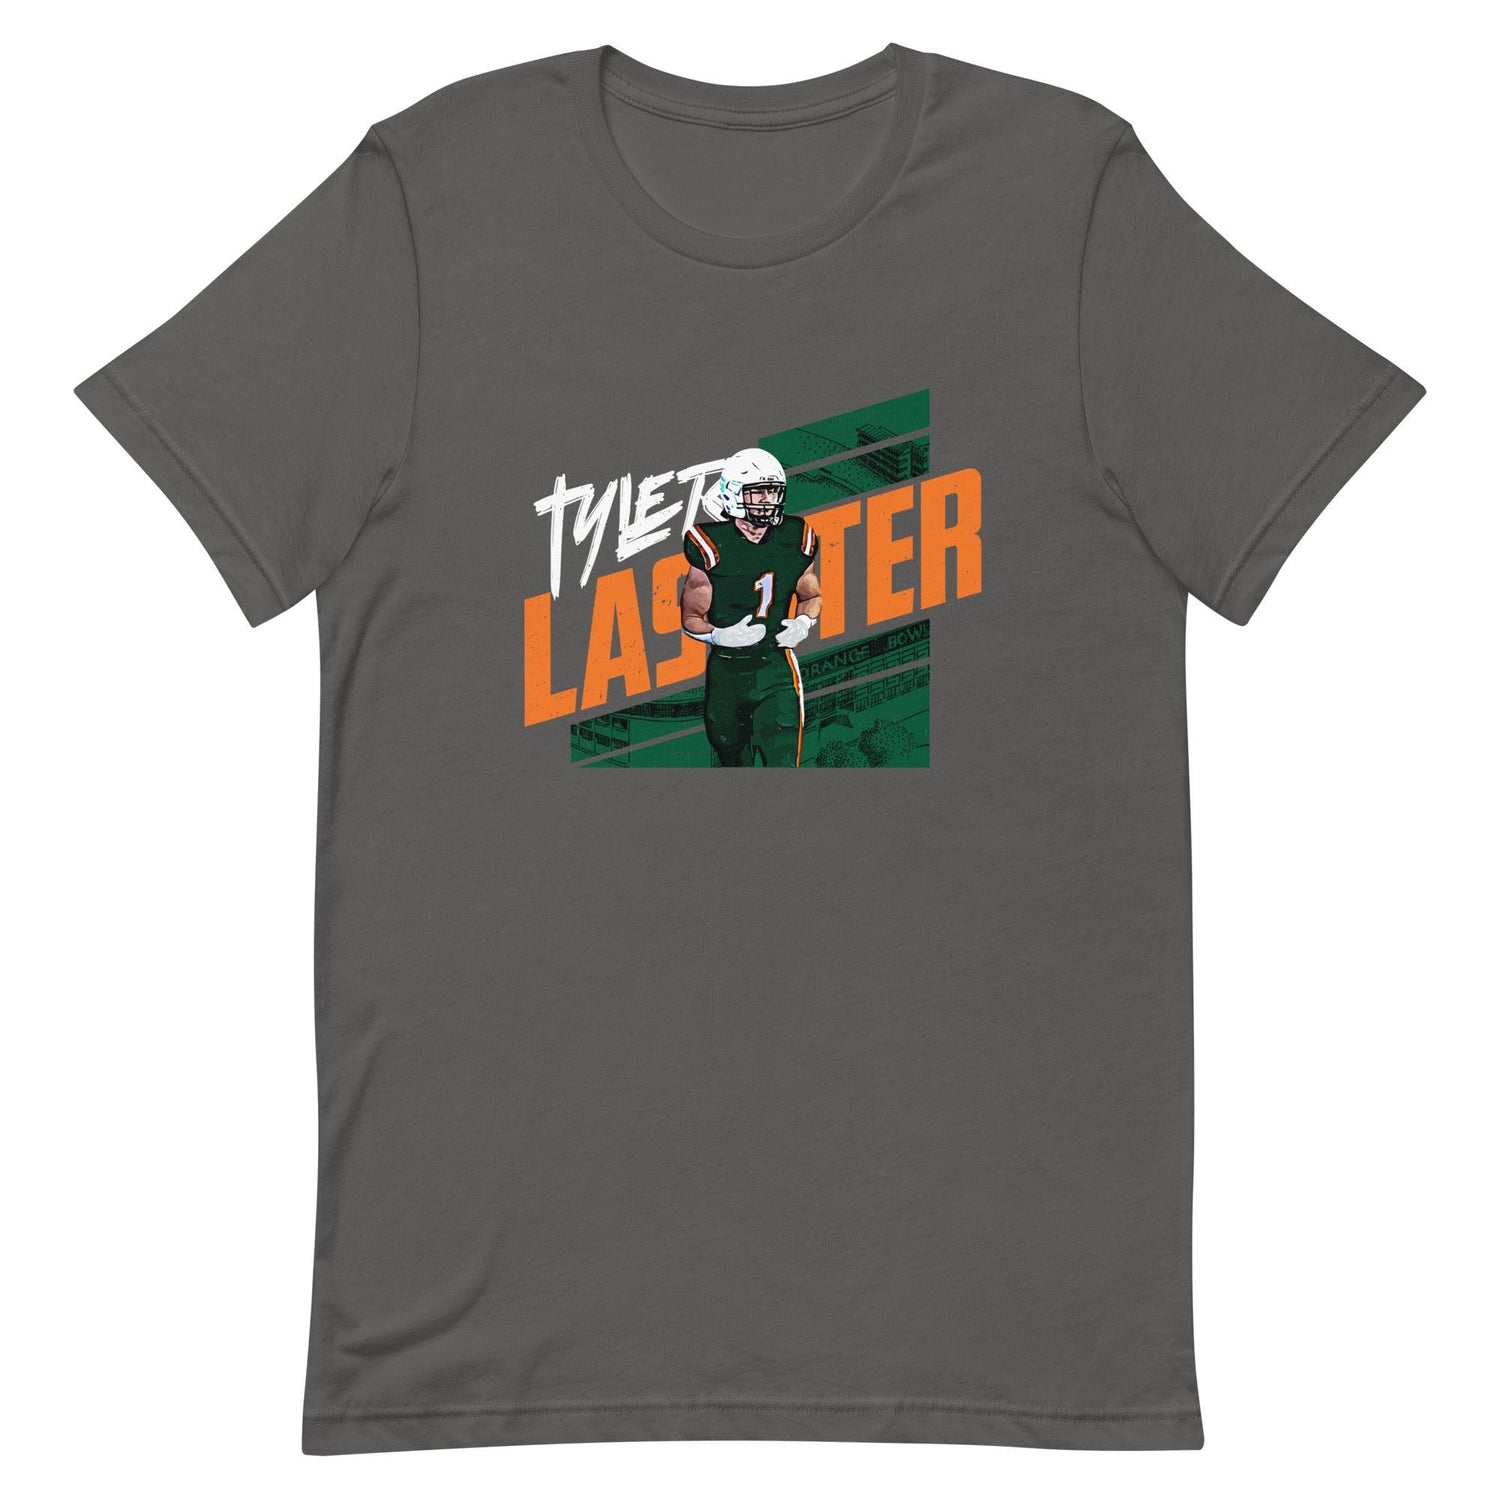 Tyler Lassiter "Gameday" t-shirt - Fan Arch